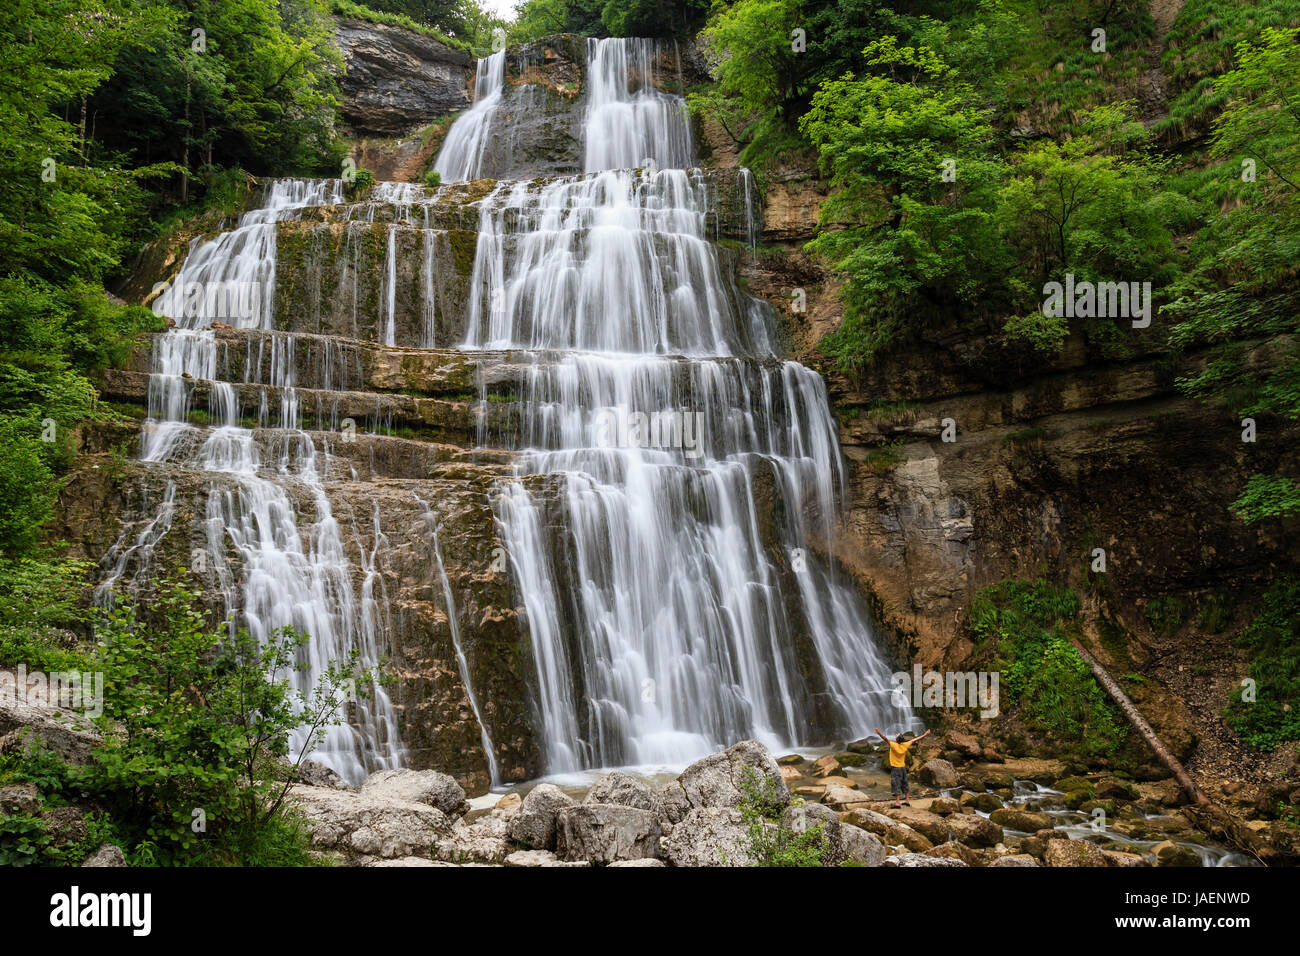 France, Jura, Menetrux en Joux, Herisson waterfalls, Eventaille fall Stock Photo